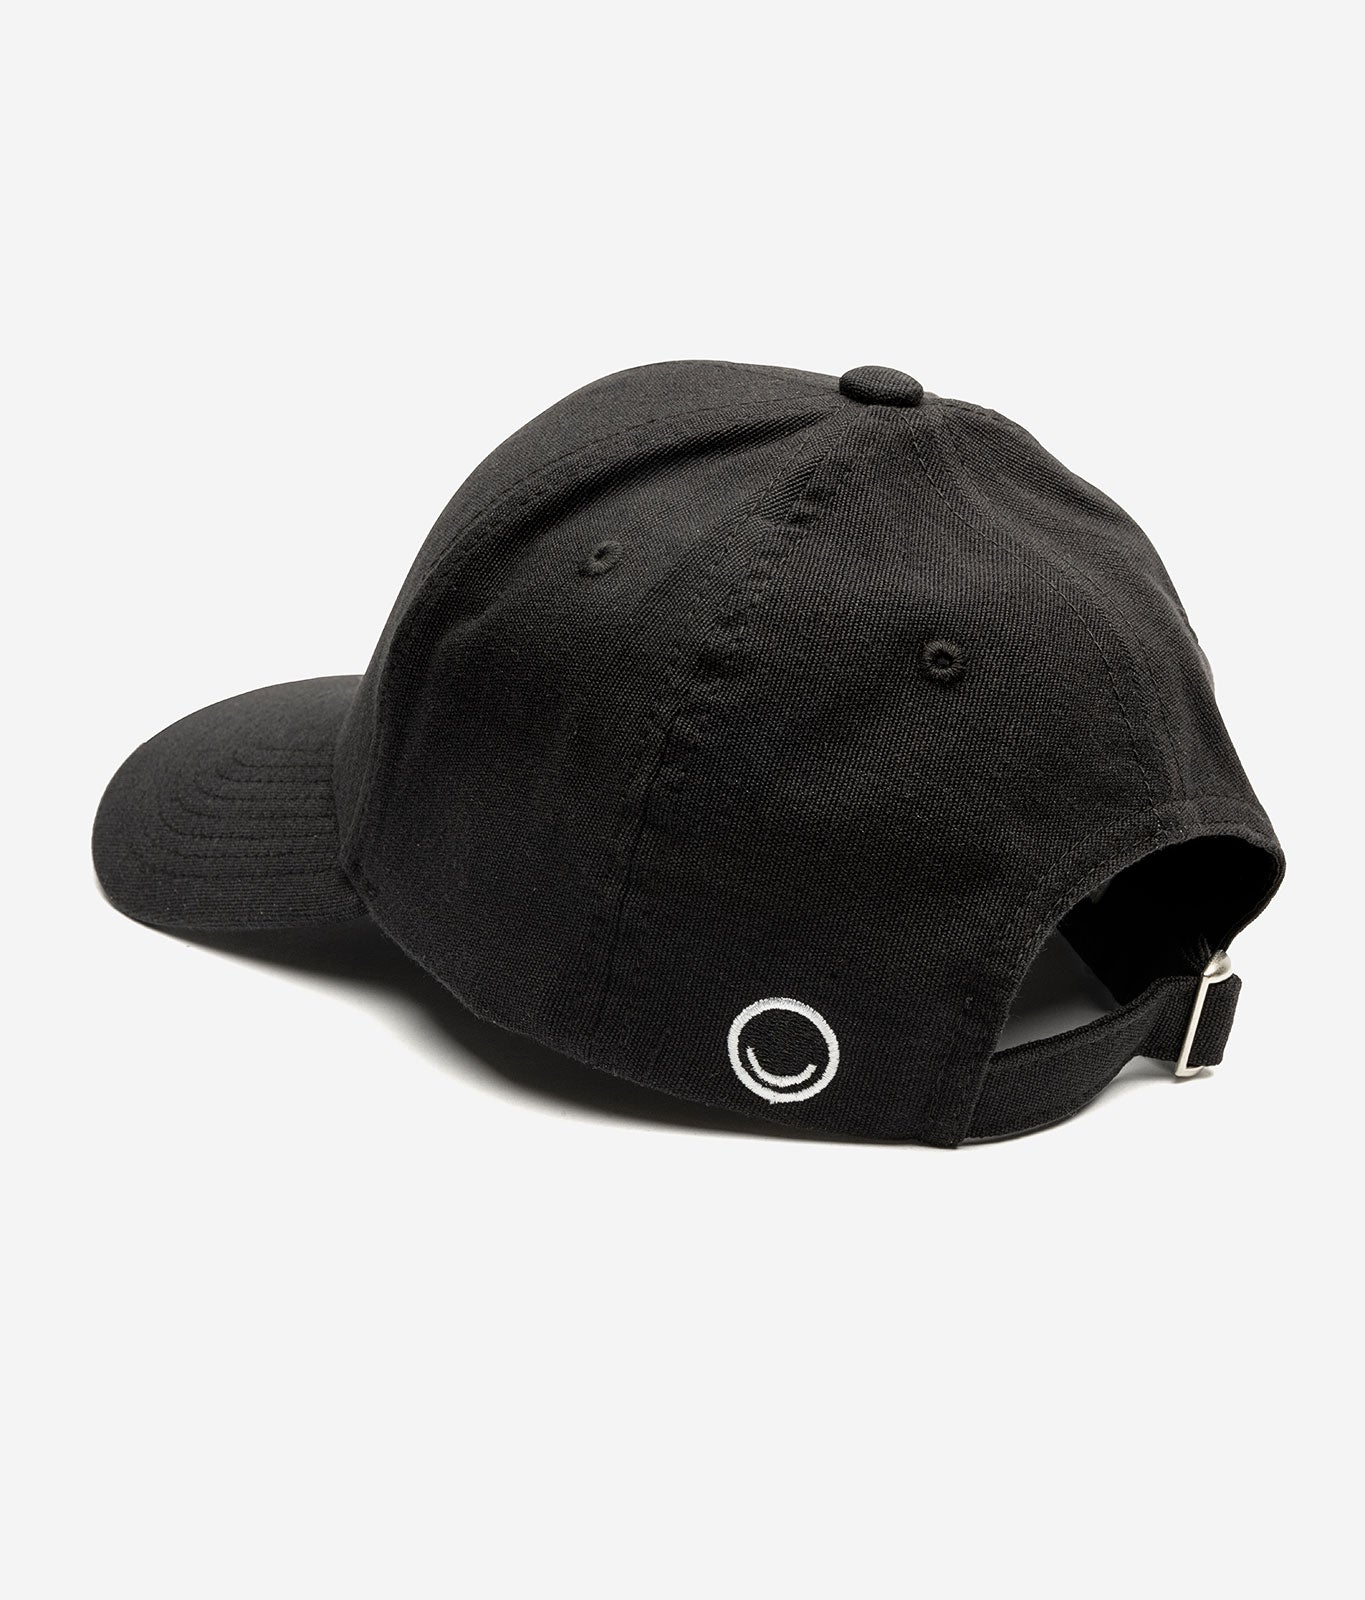 Stiksen │ 107 Uniform Black Cap Baseball